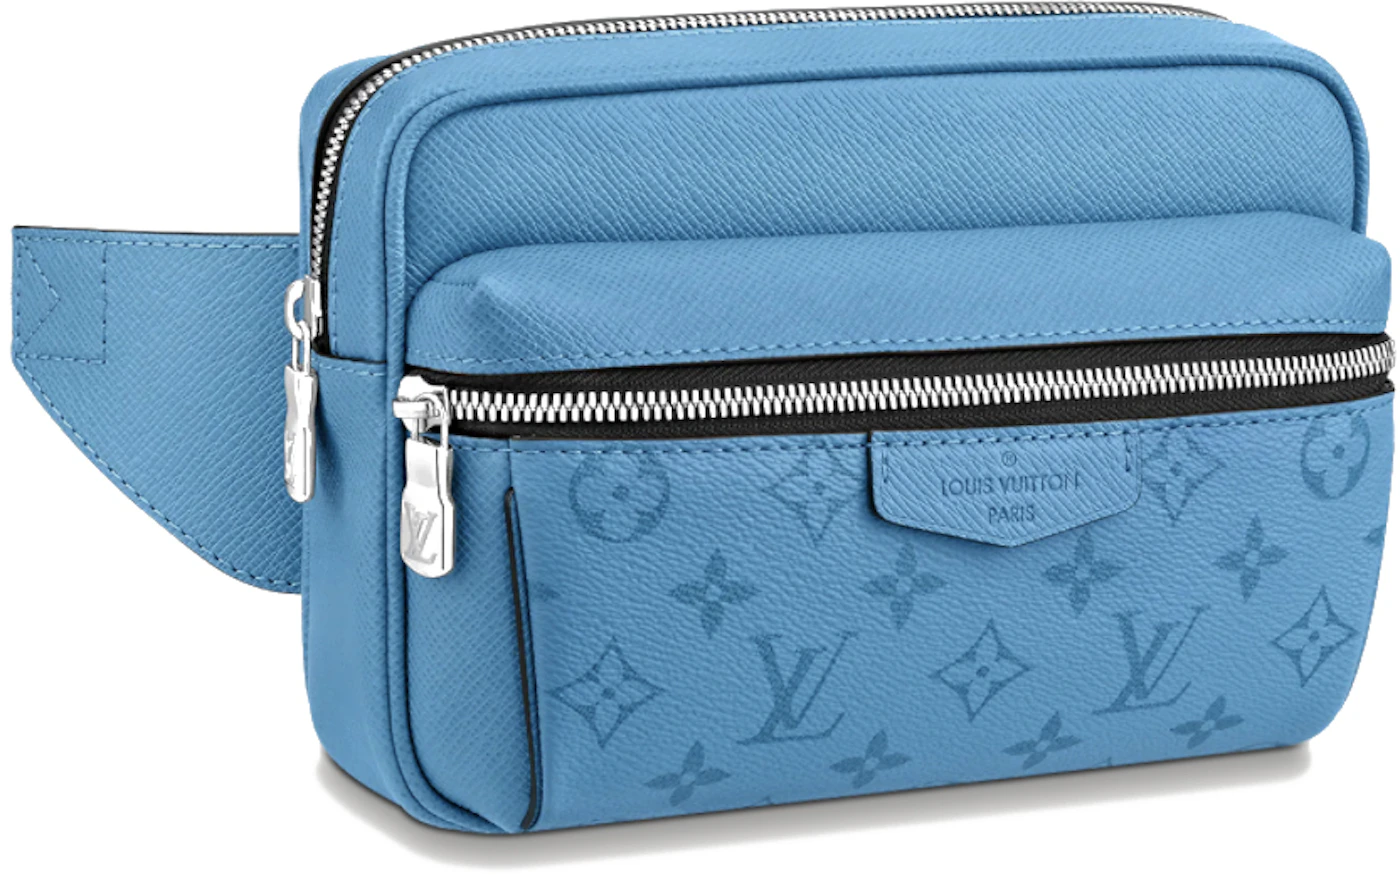 Blue Louis Vuitton Monogram Denim Outdoor Bumbag Belt Bag